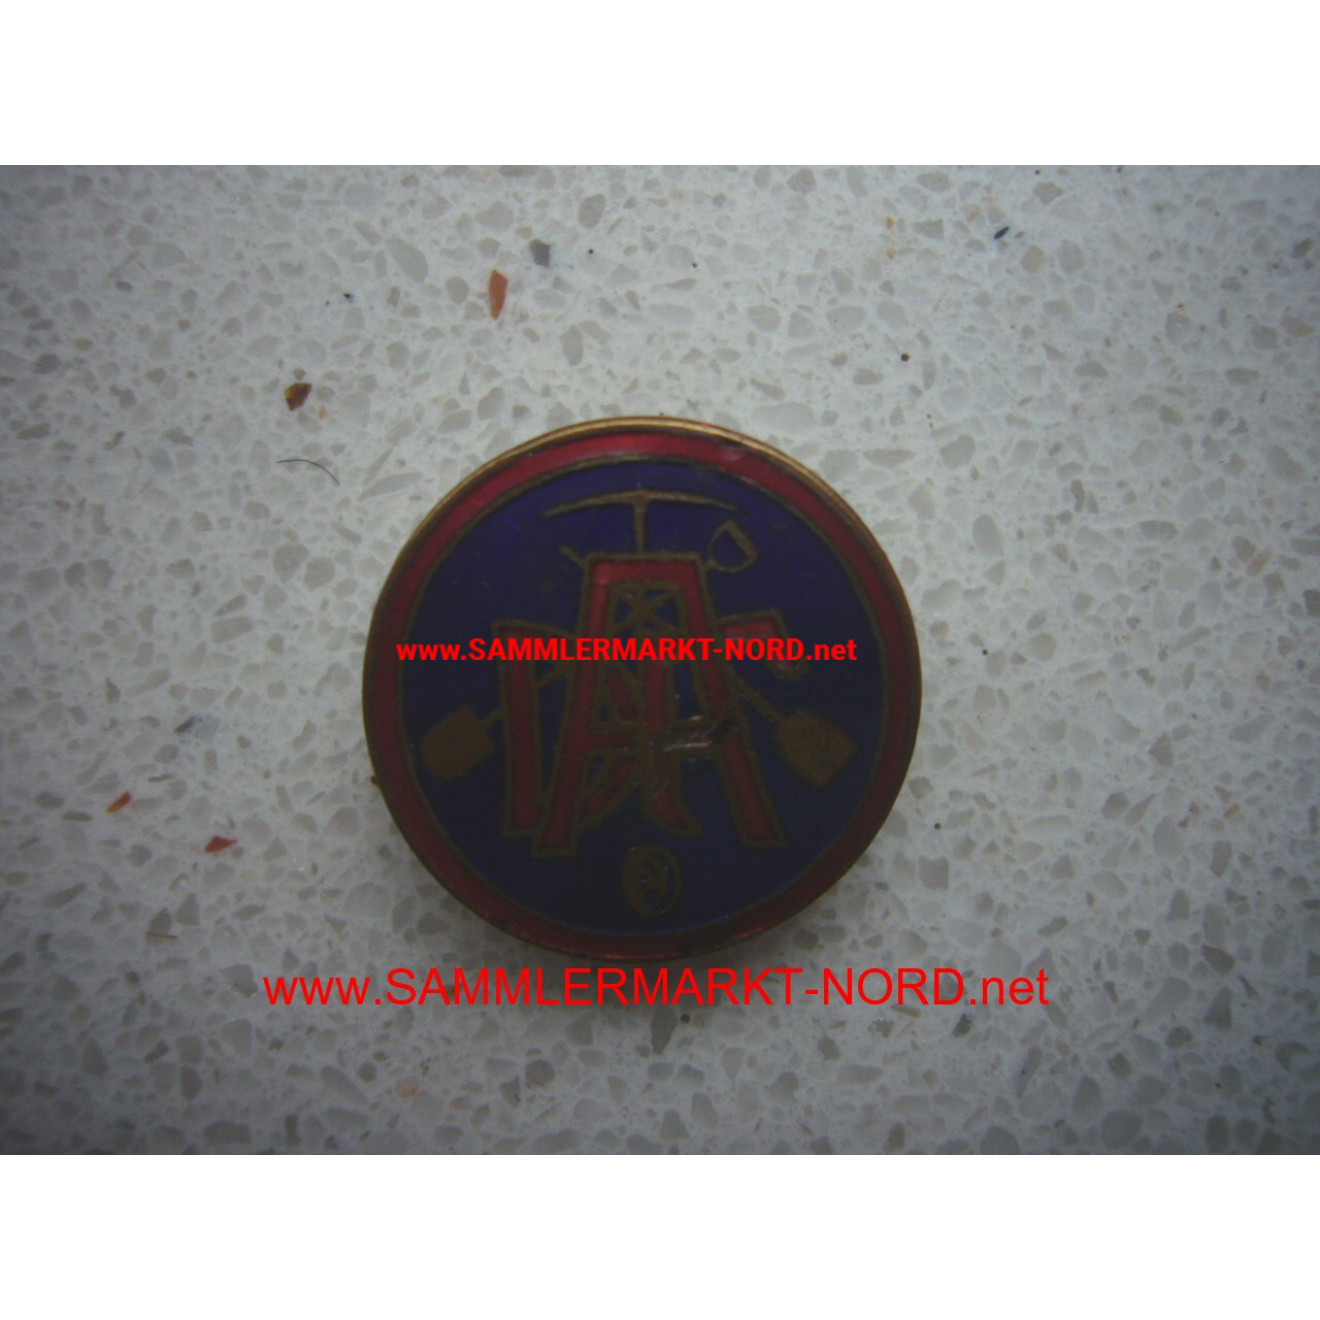 Voluntary Labor Service (FAD) - Membership Badge